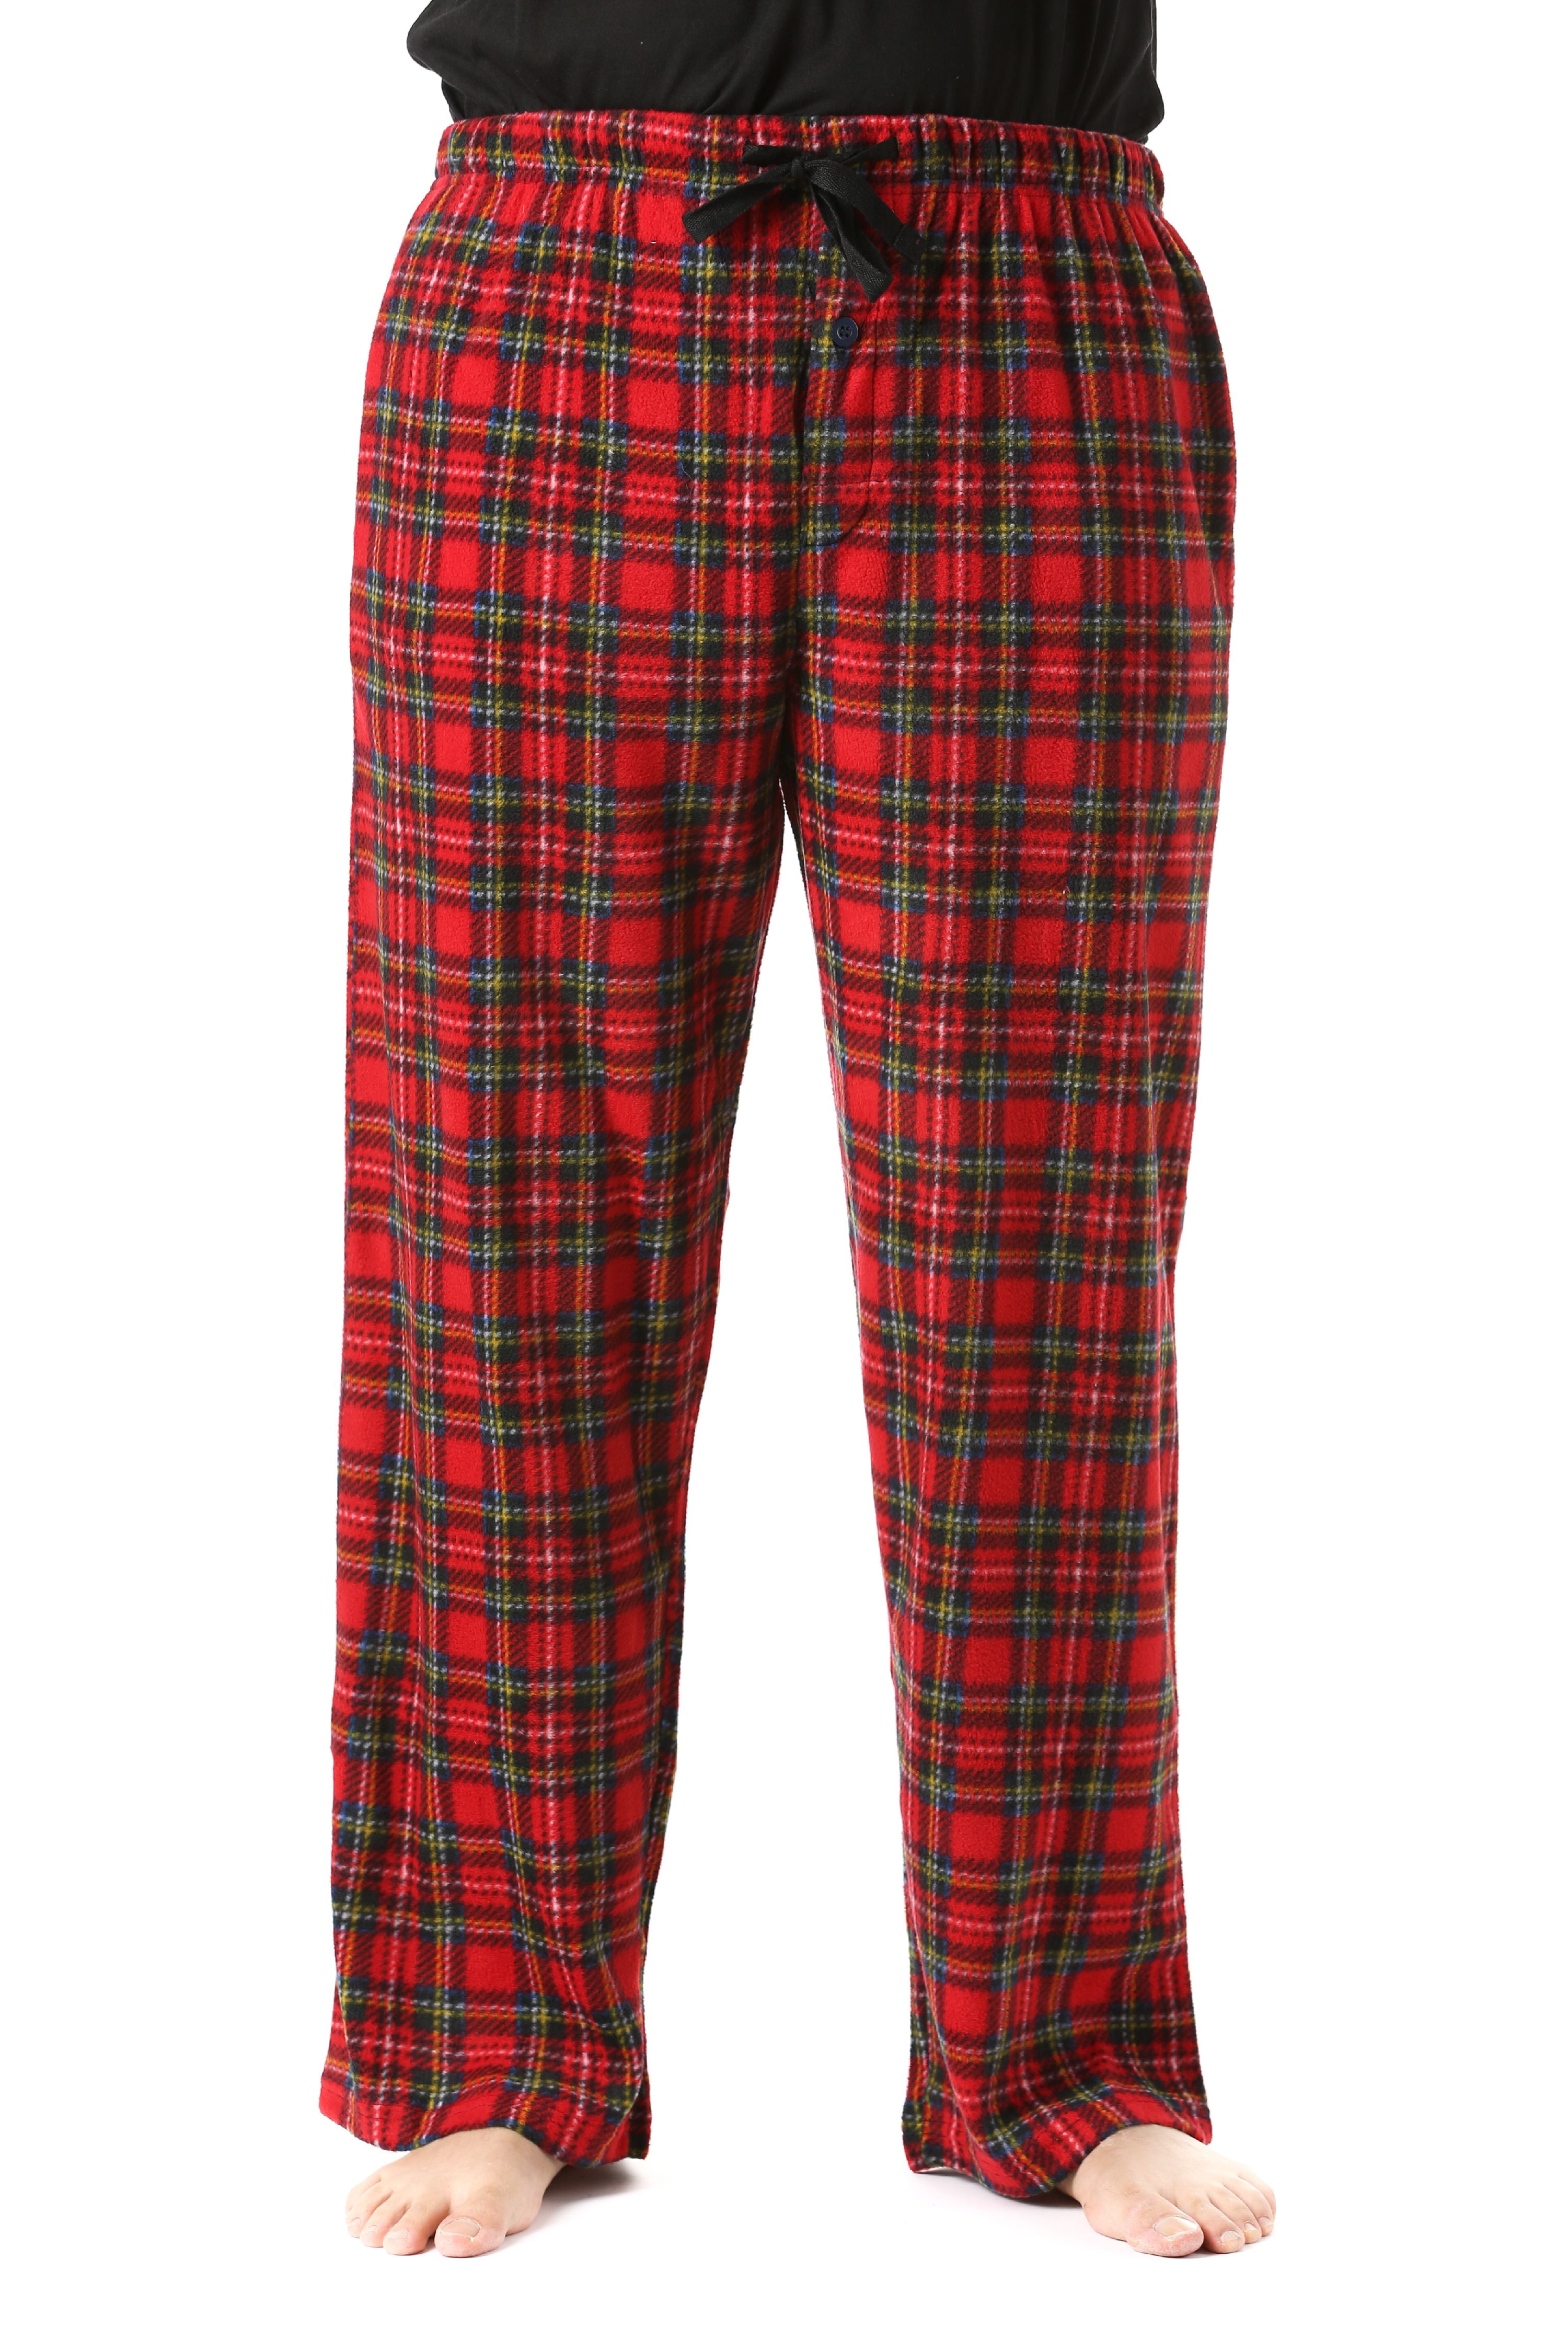 Followme - #FollowMe Microfleece Mens Pajama Pants with Pockets (Red ...